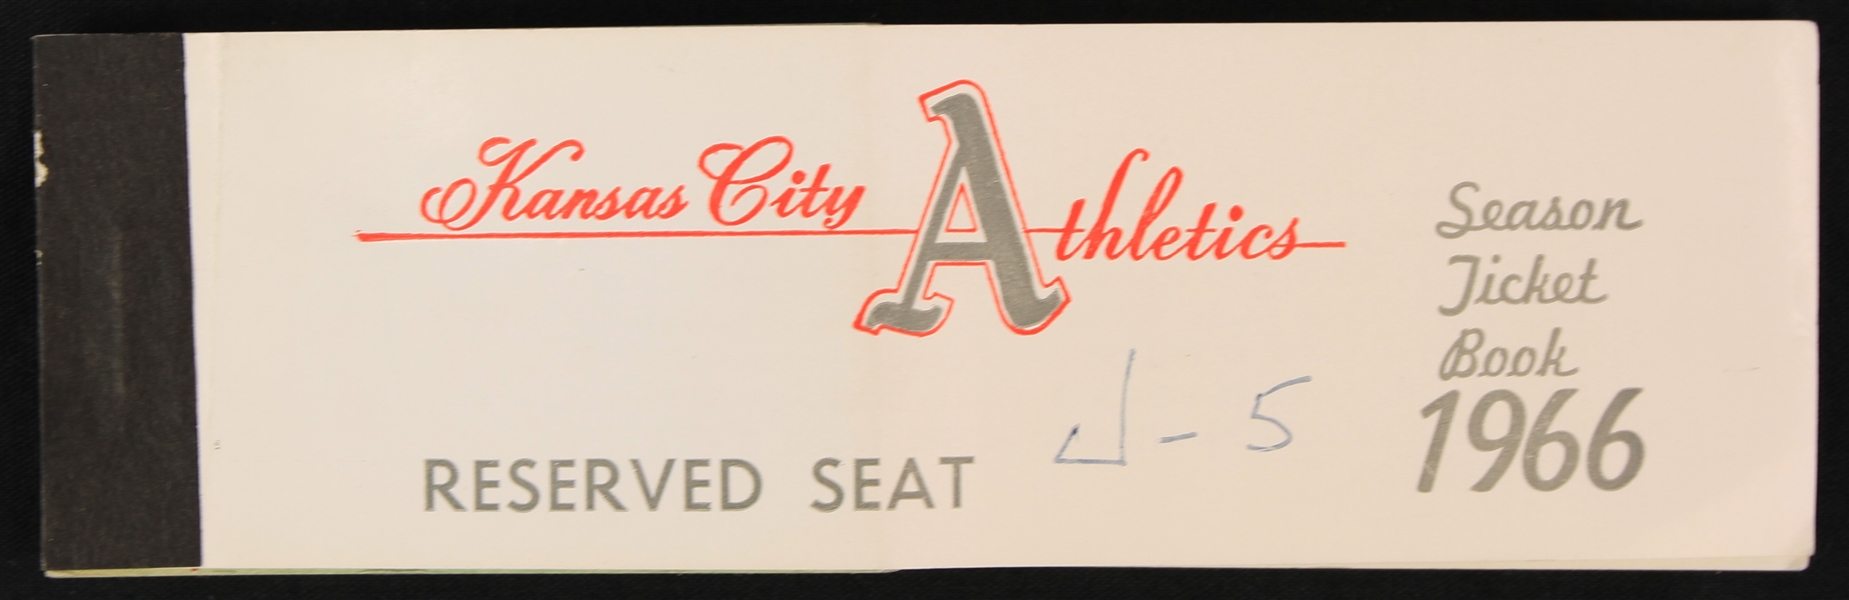 1966 Kansas City Athletics Season Ticket Book w/ Mickey Mantle 475th Career HR Stub